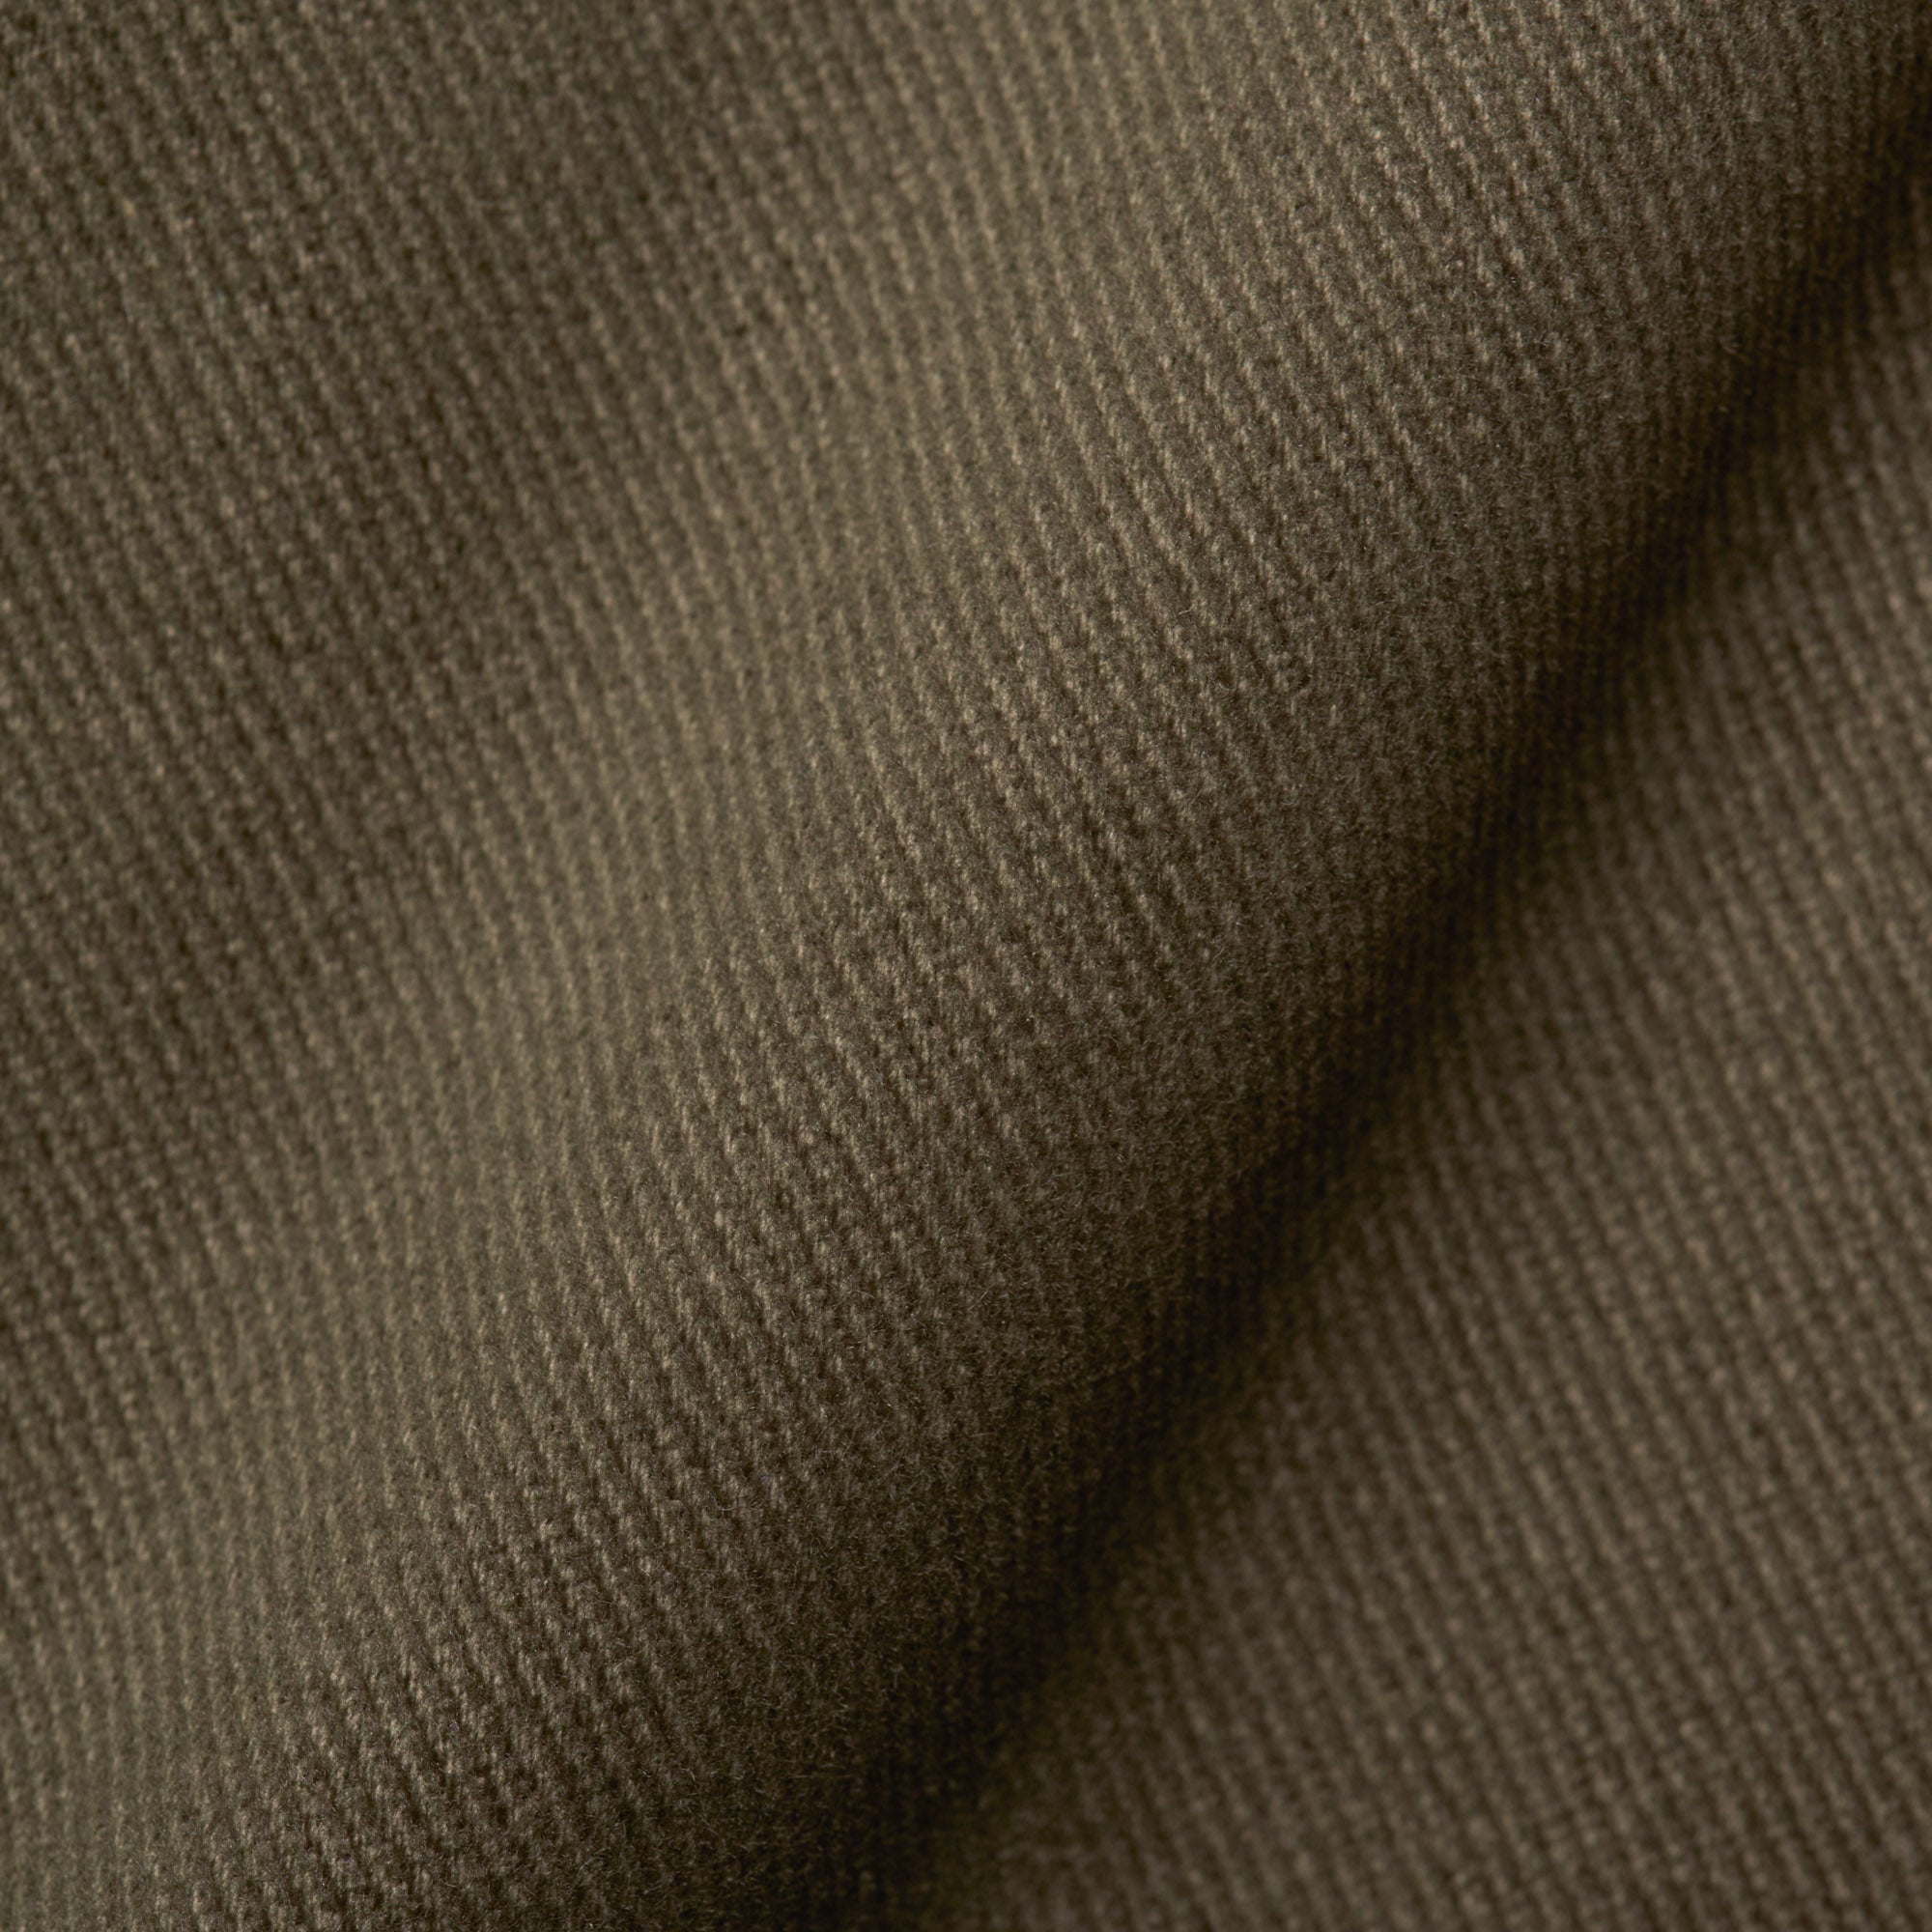 PT01 PANTALONI TORINO "Jacques" Army Green Twill Cotton Flat Front Pants NEW